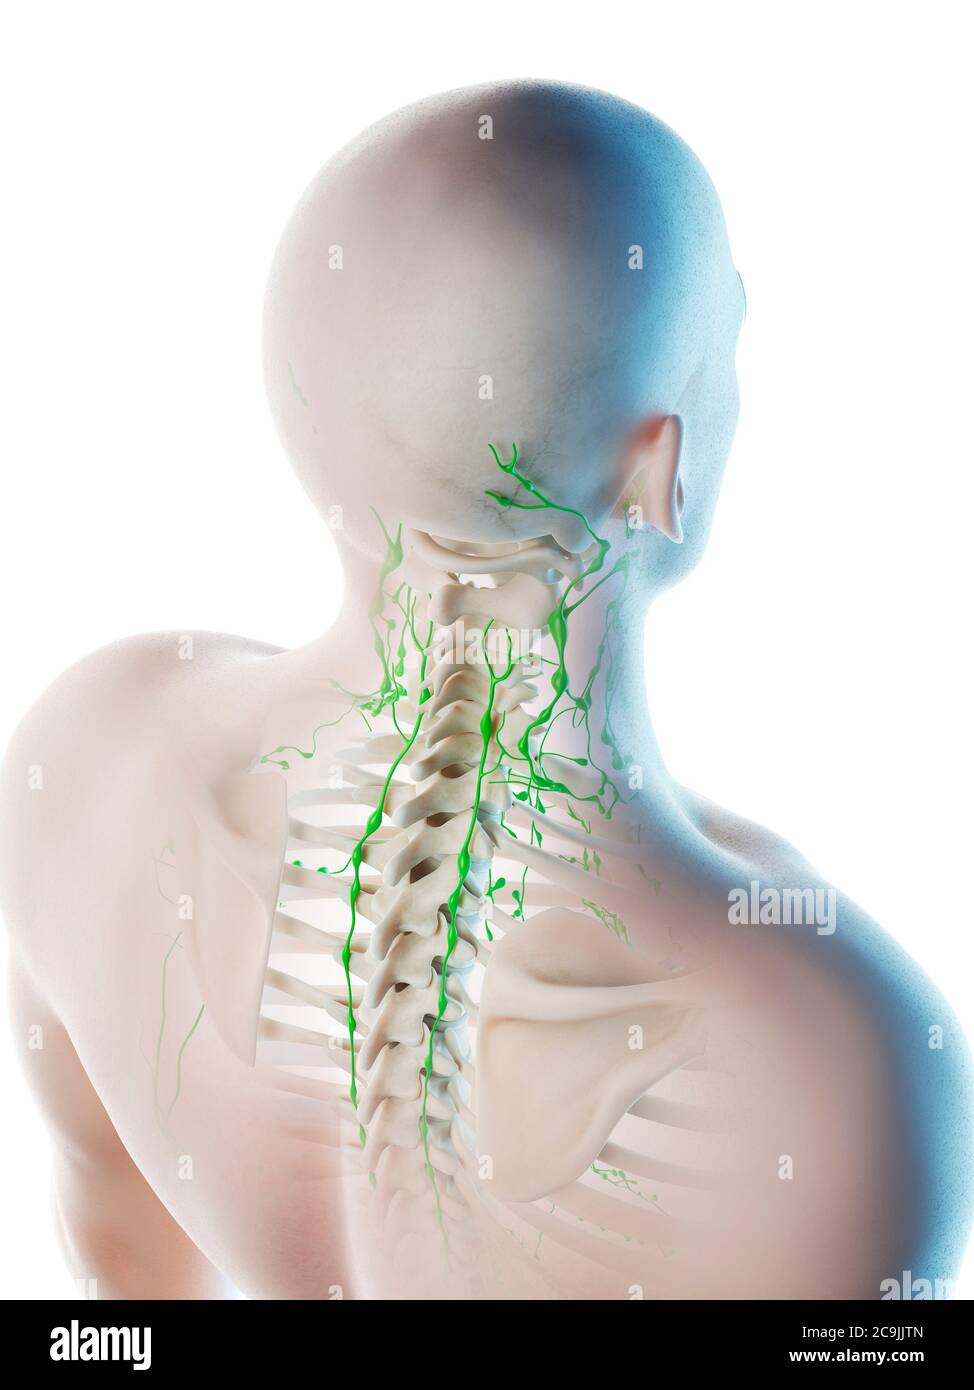 lymph nodes back neck